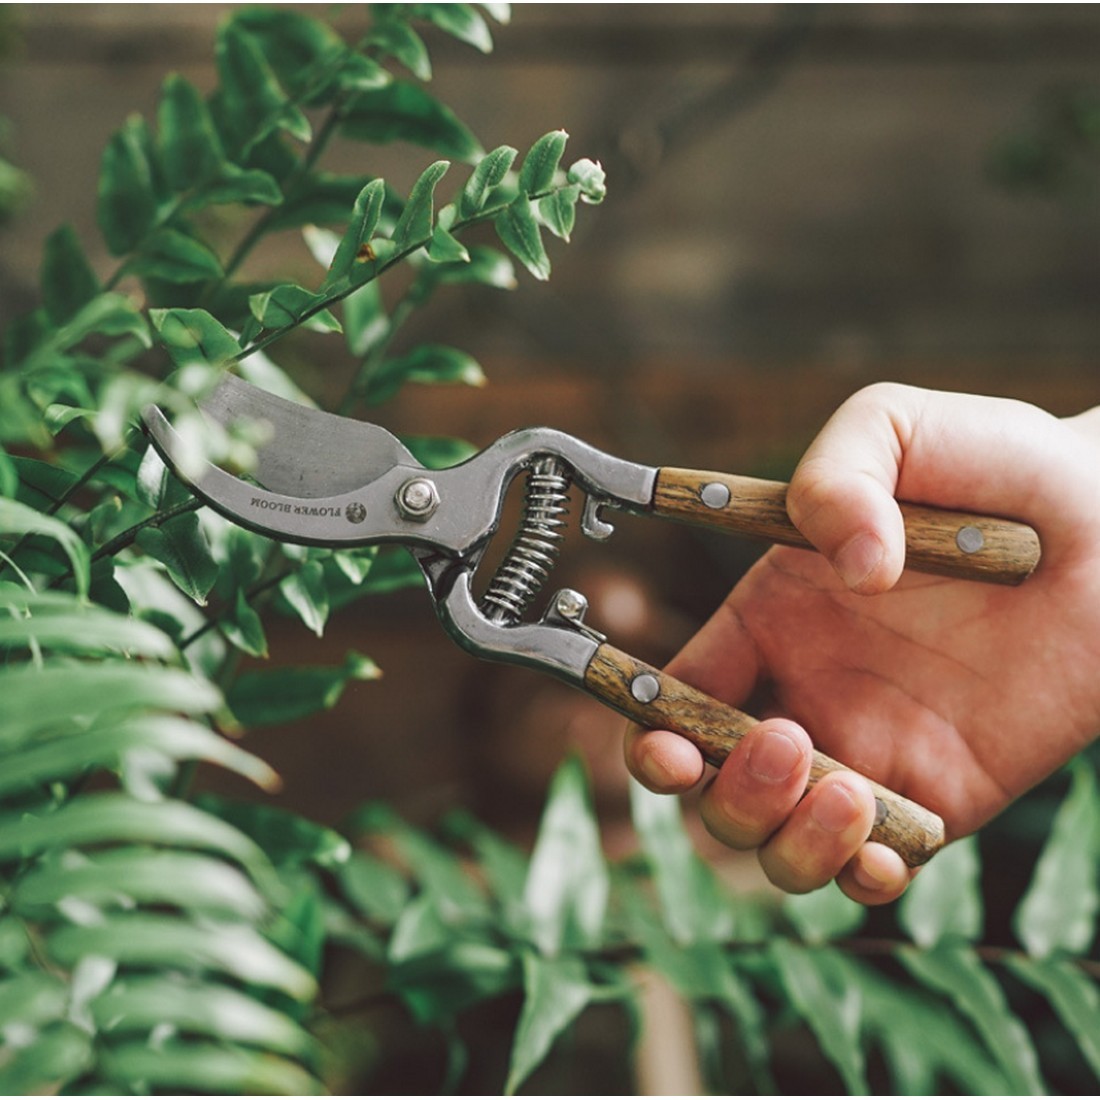  pruning basami scissors for gardening aperture width adjustment possibility pruning fruit tree . garden. tree bonsai pruning tool gardening work pruning scissors gardening for knife 